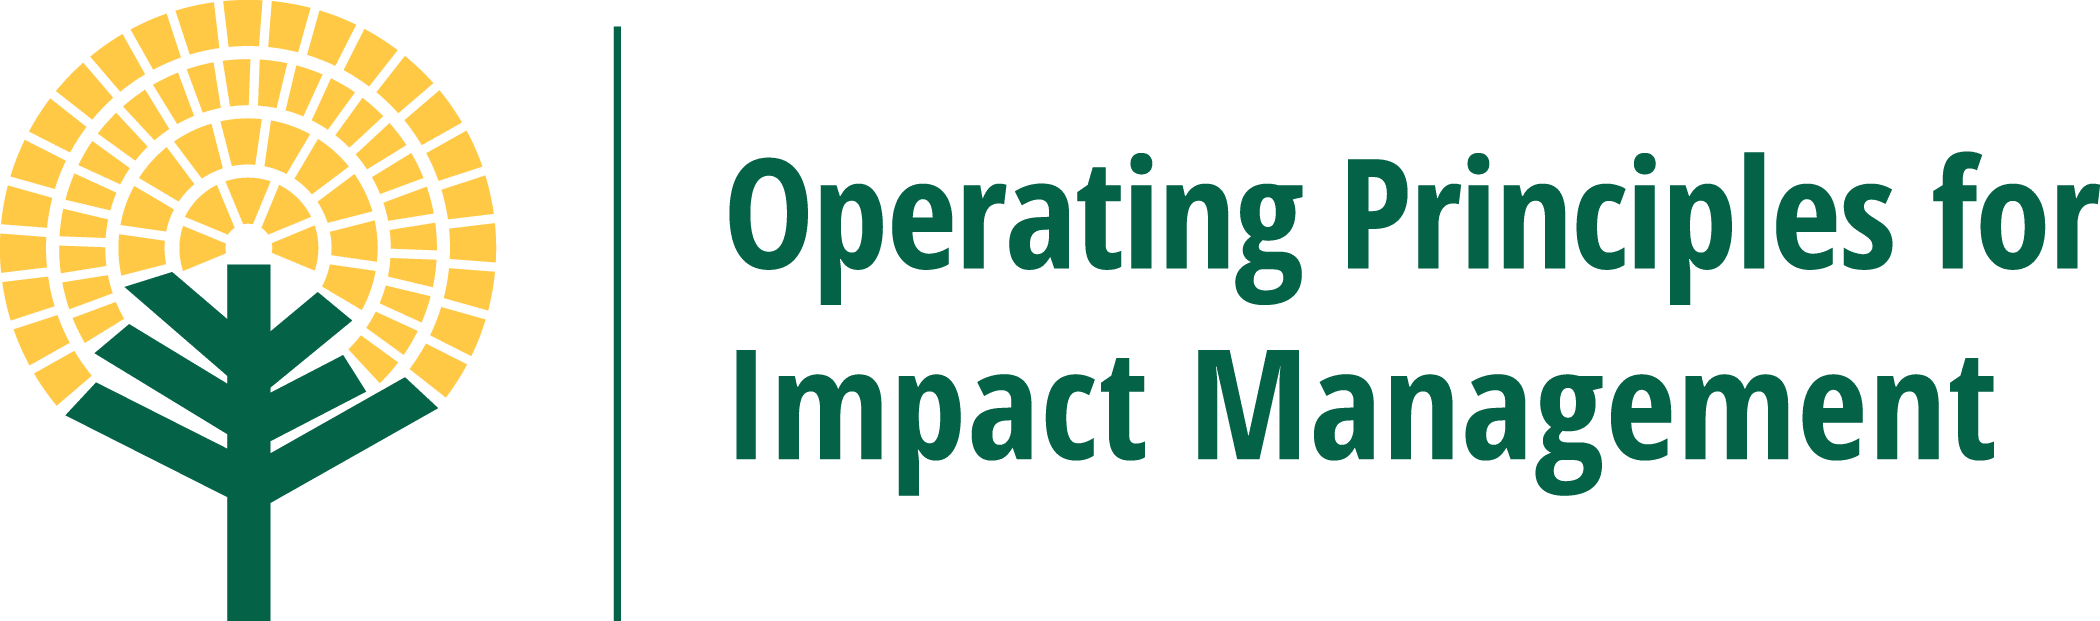 Operating Principles for Impact Management logo